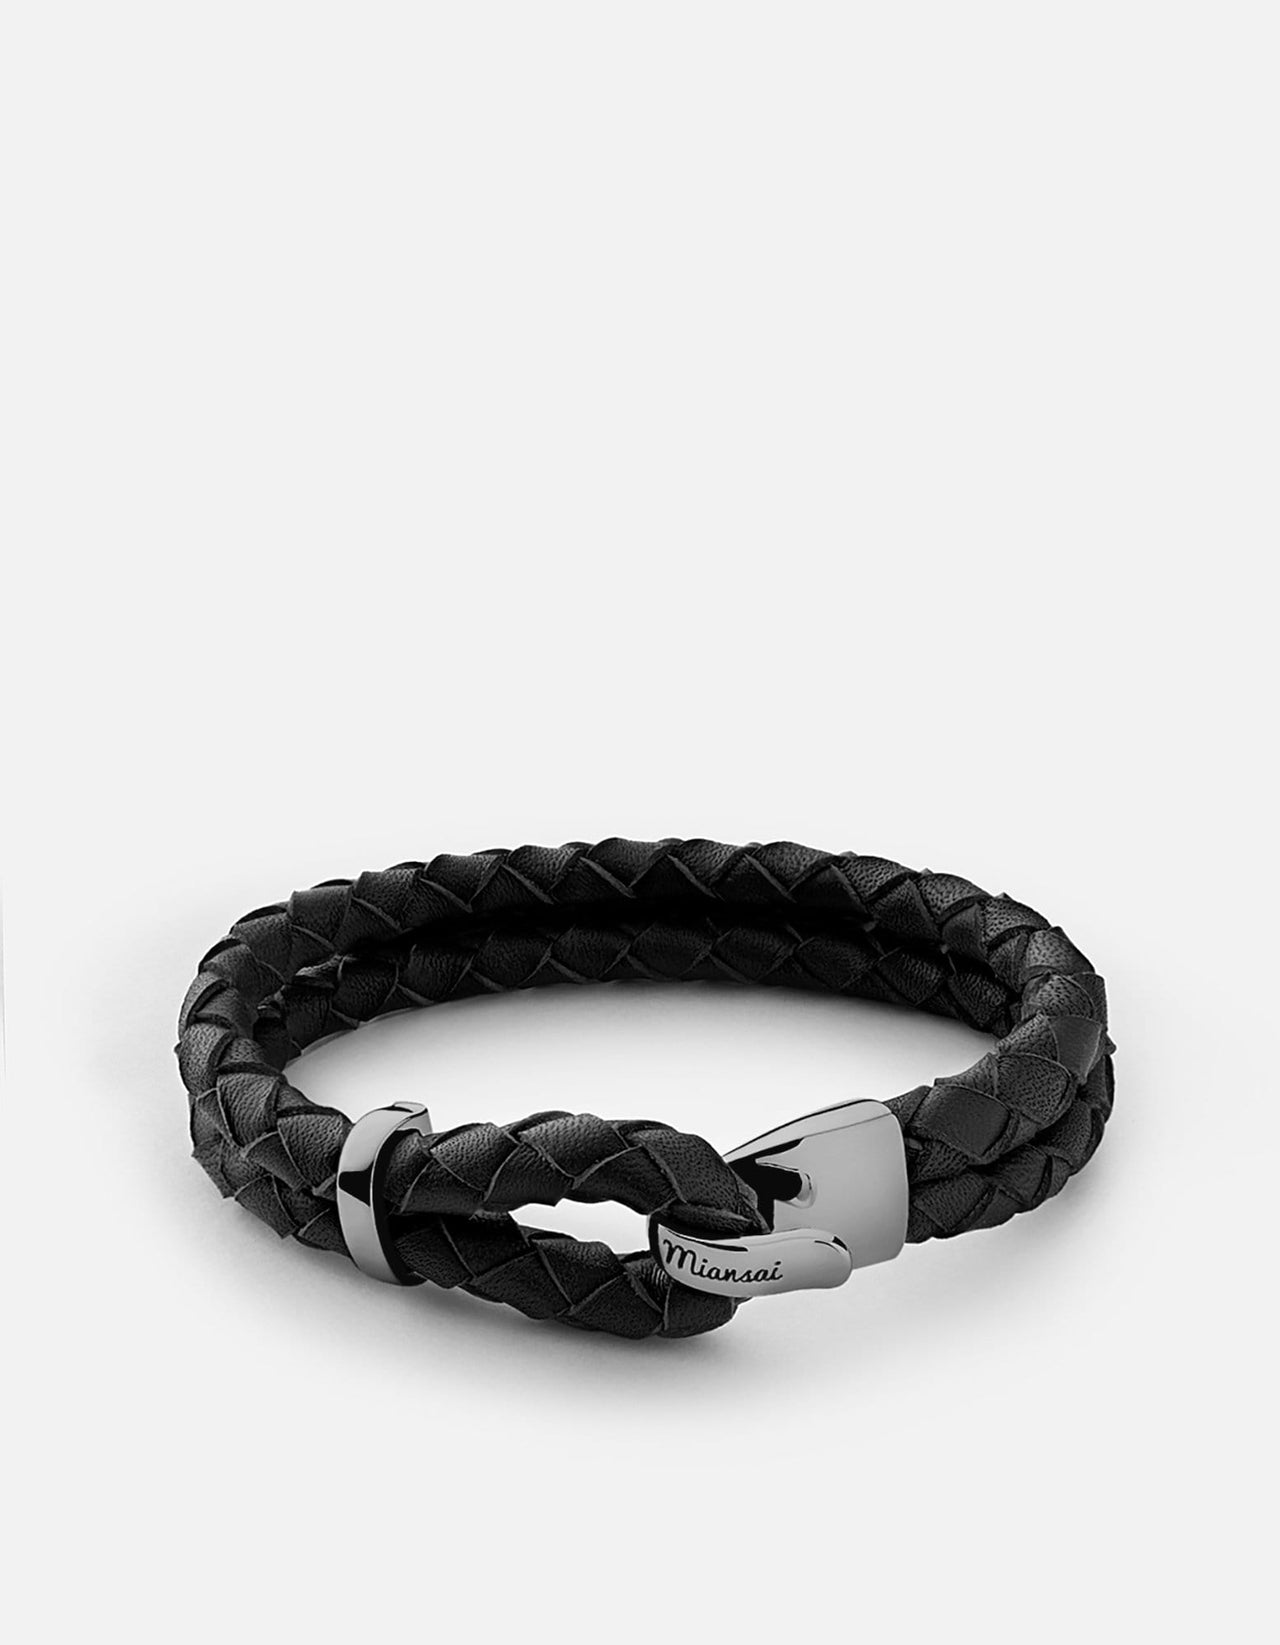 Beacon Leather Bracelet, Black Rhodium, Polished, Black | Men's ...